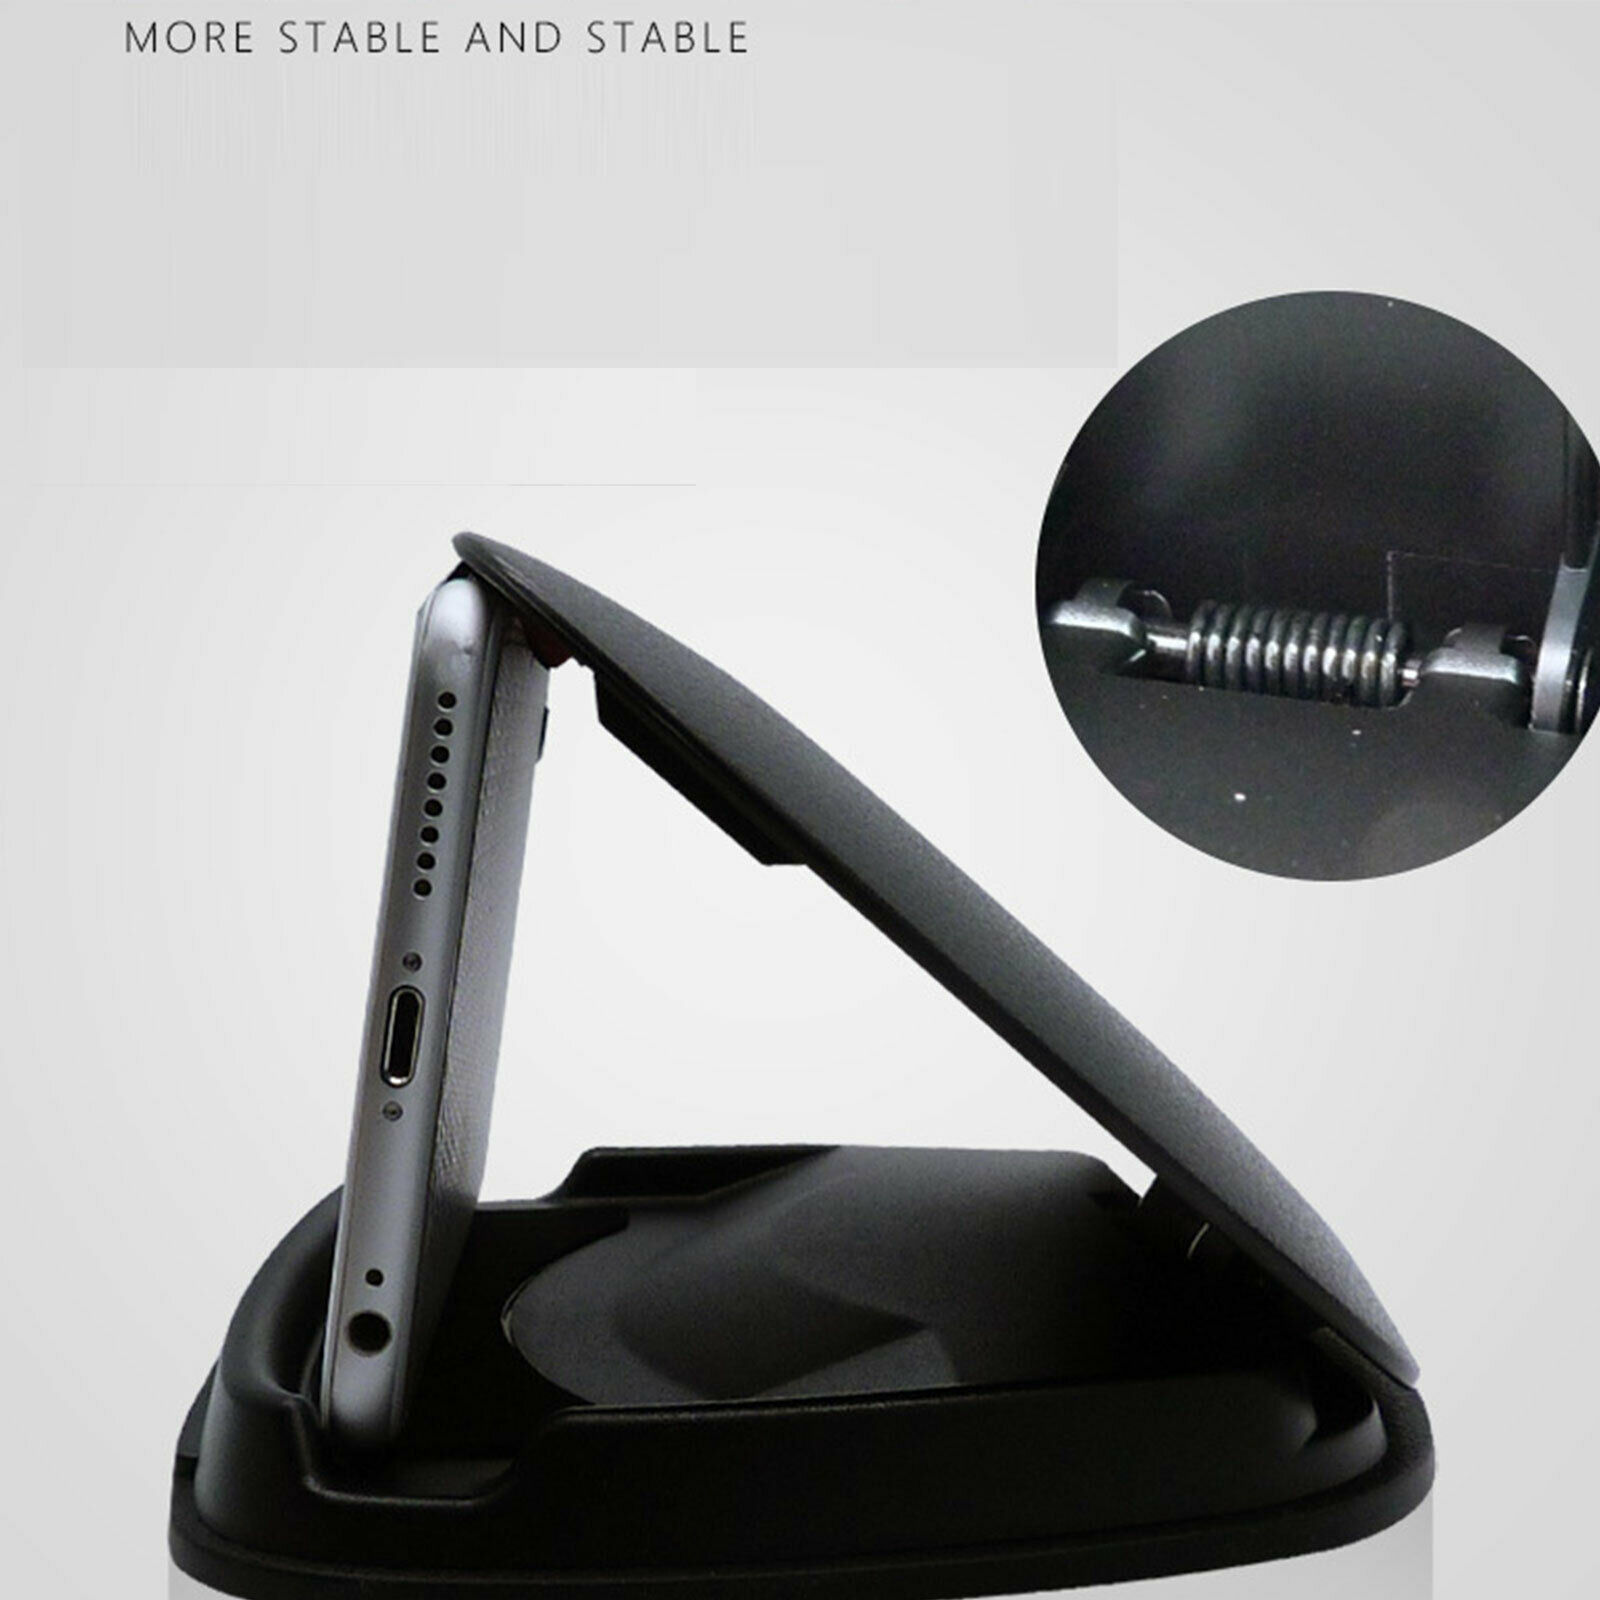 Deegotech Car Phone Holder, Car Phone Cradle - Black Mobile Dash Stand fits GPS